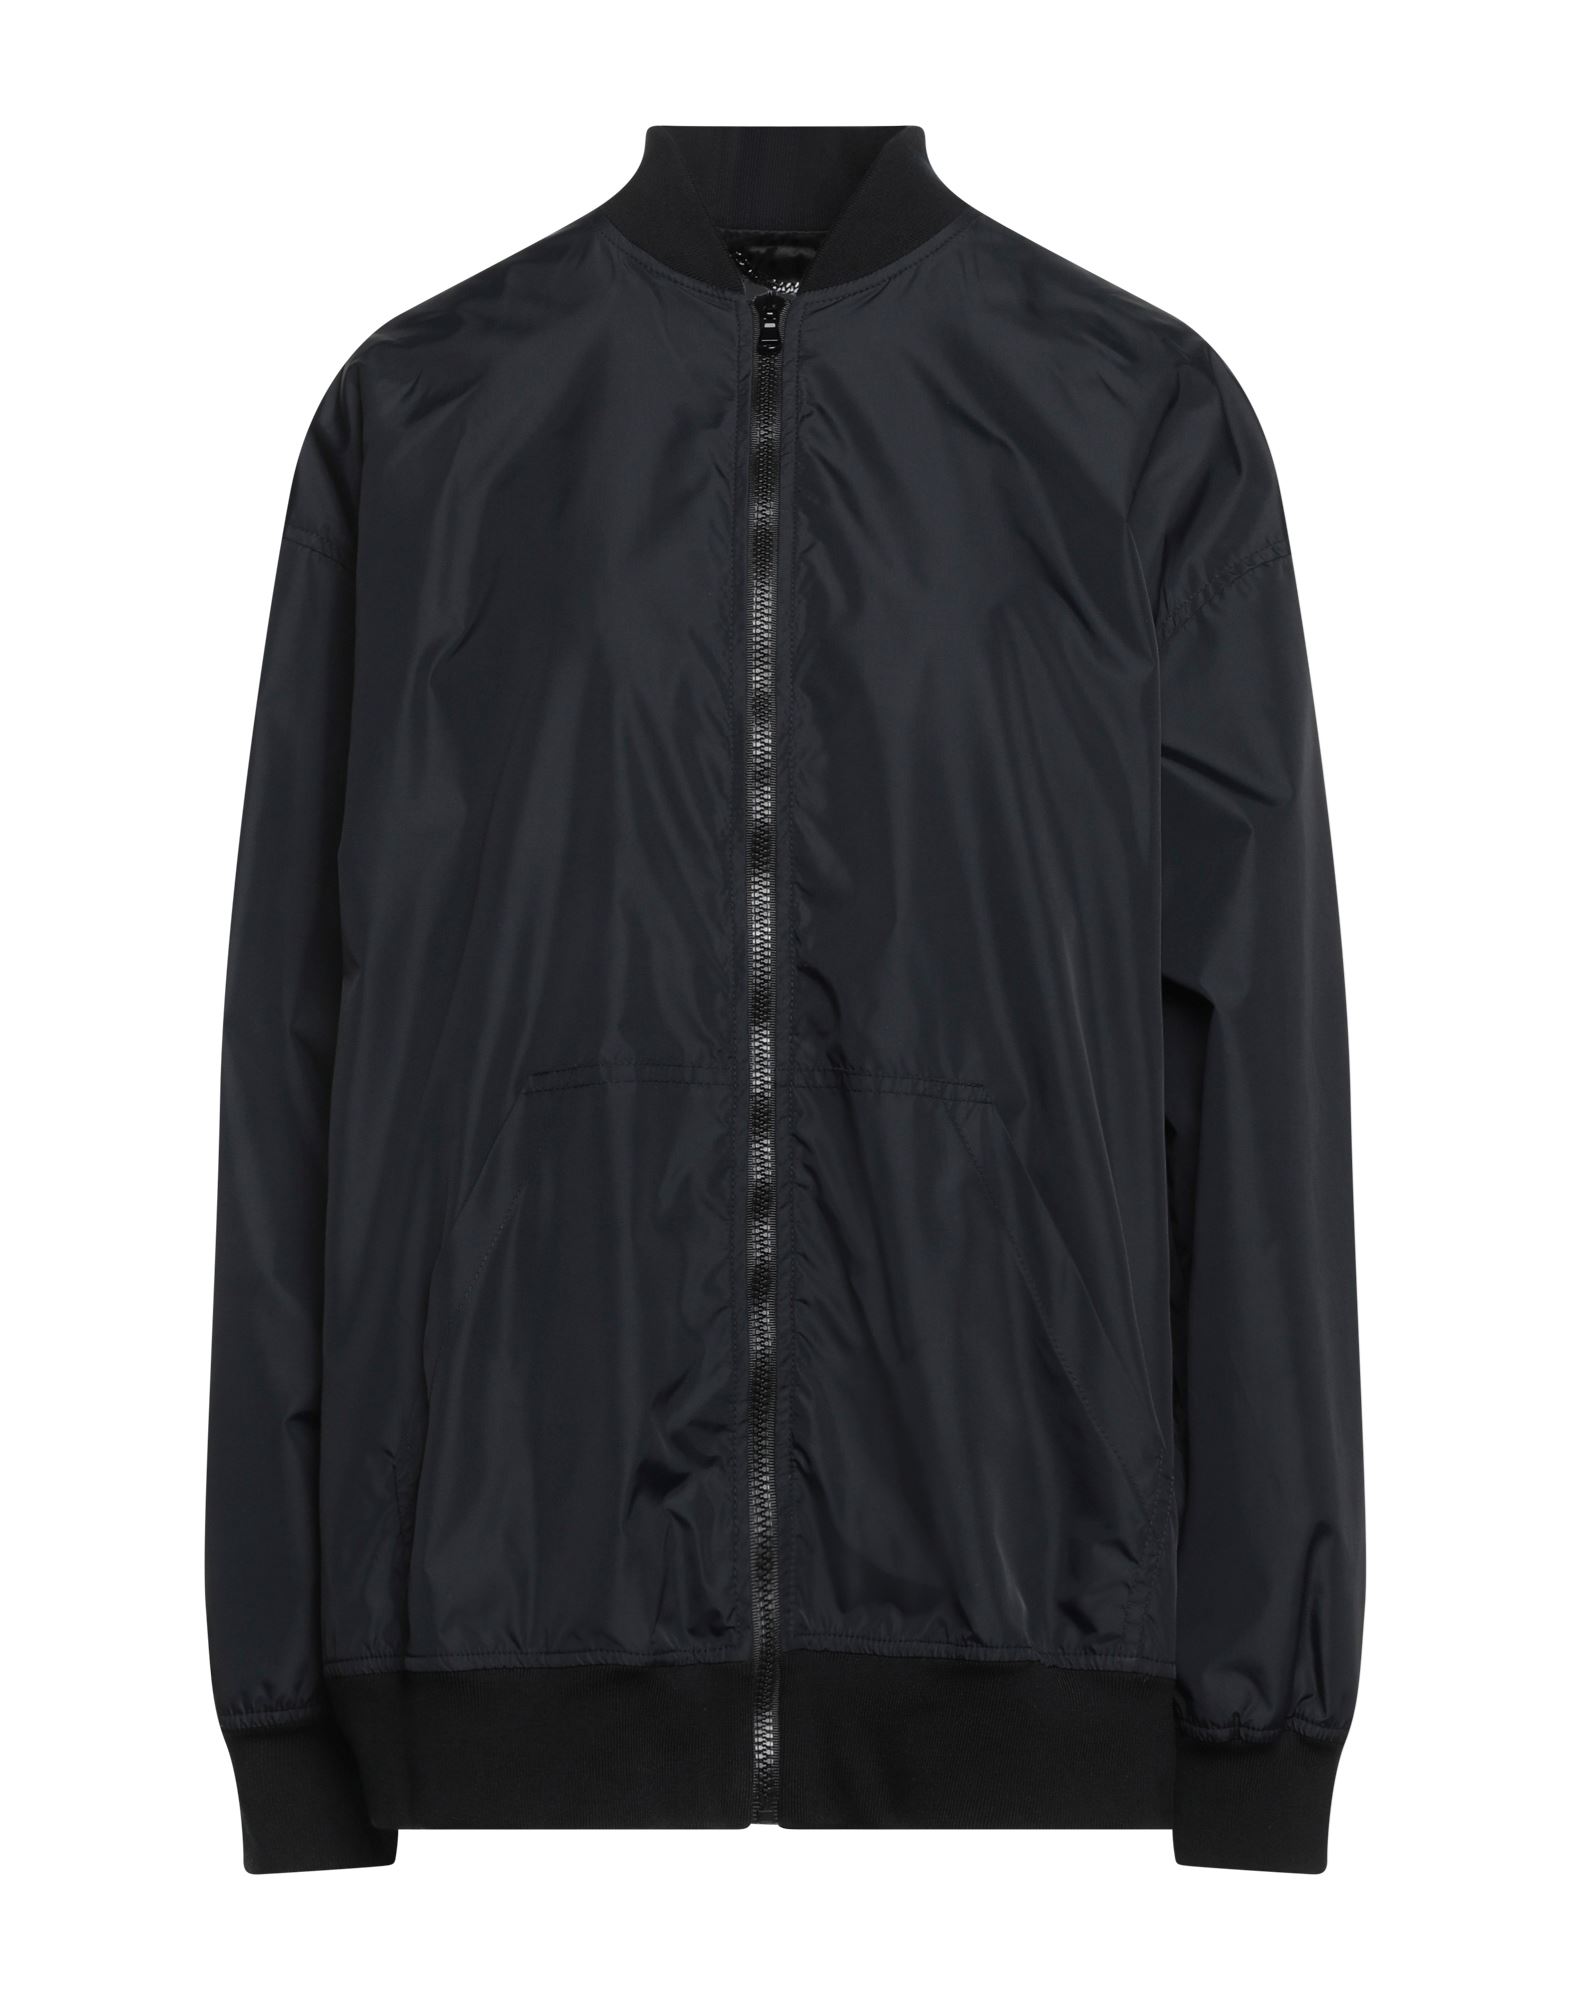 Moschino Jackets In Black